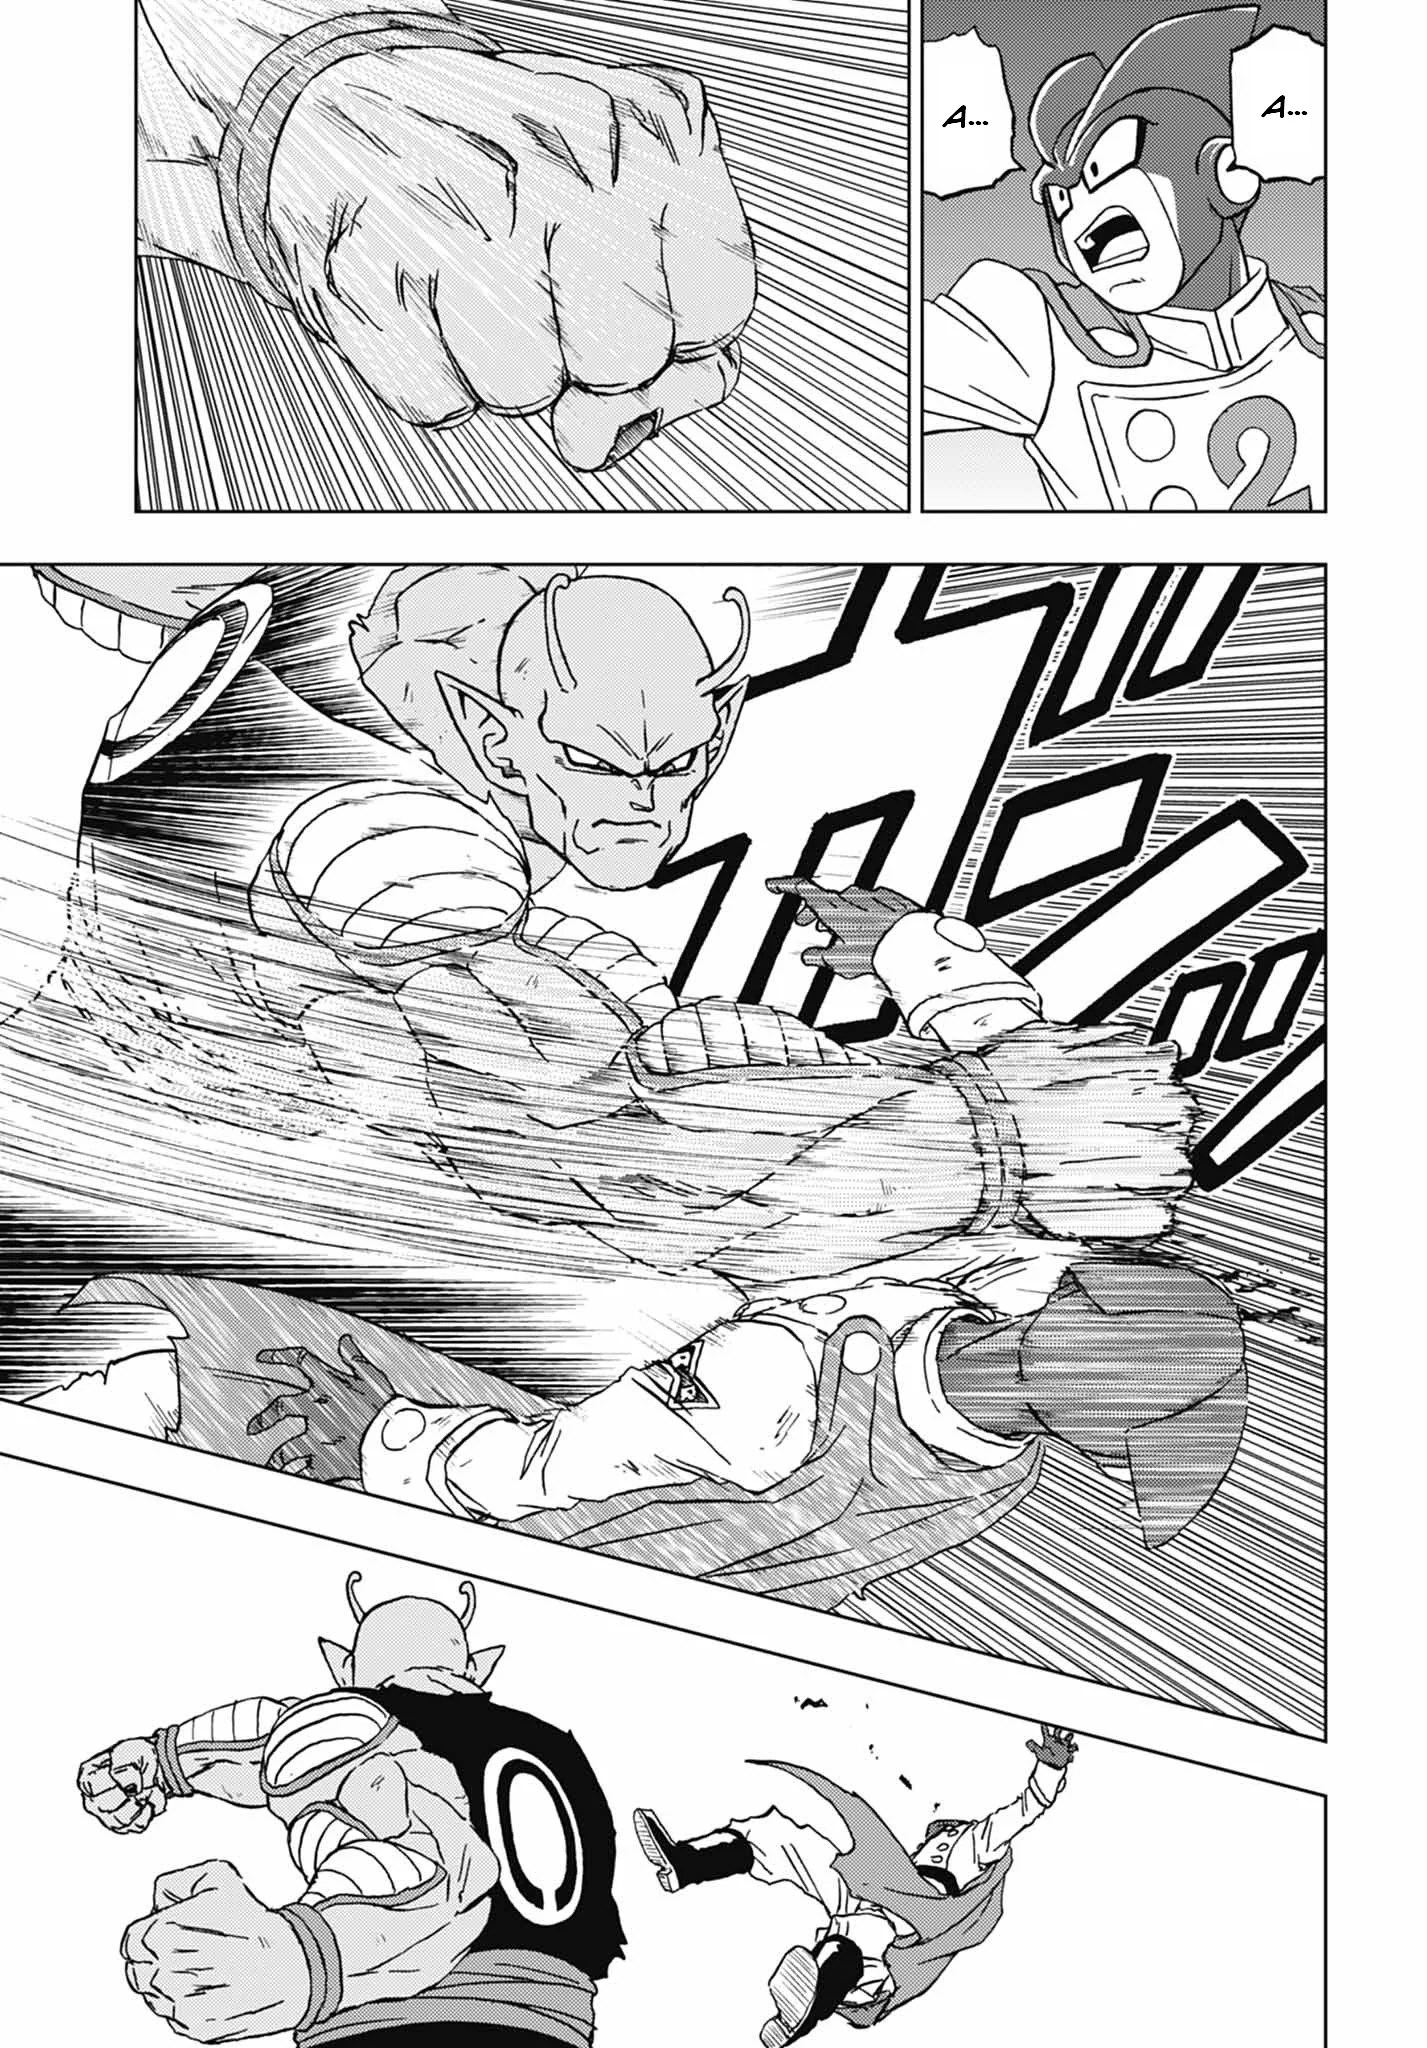 Trang 9 - Dragon Ball Super 48